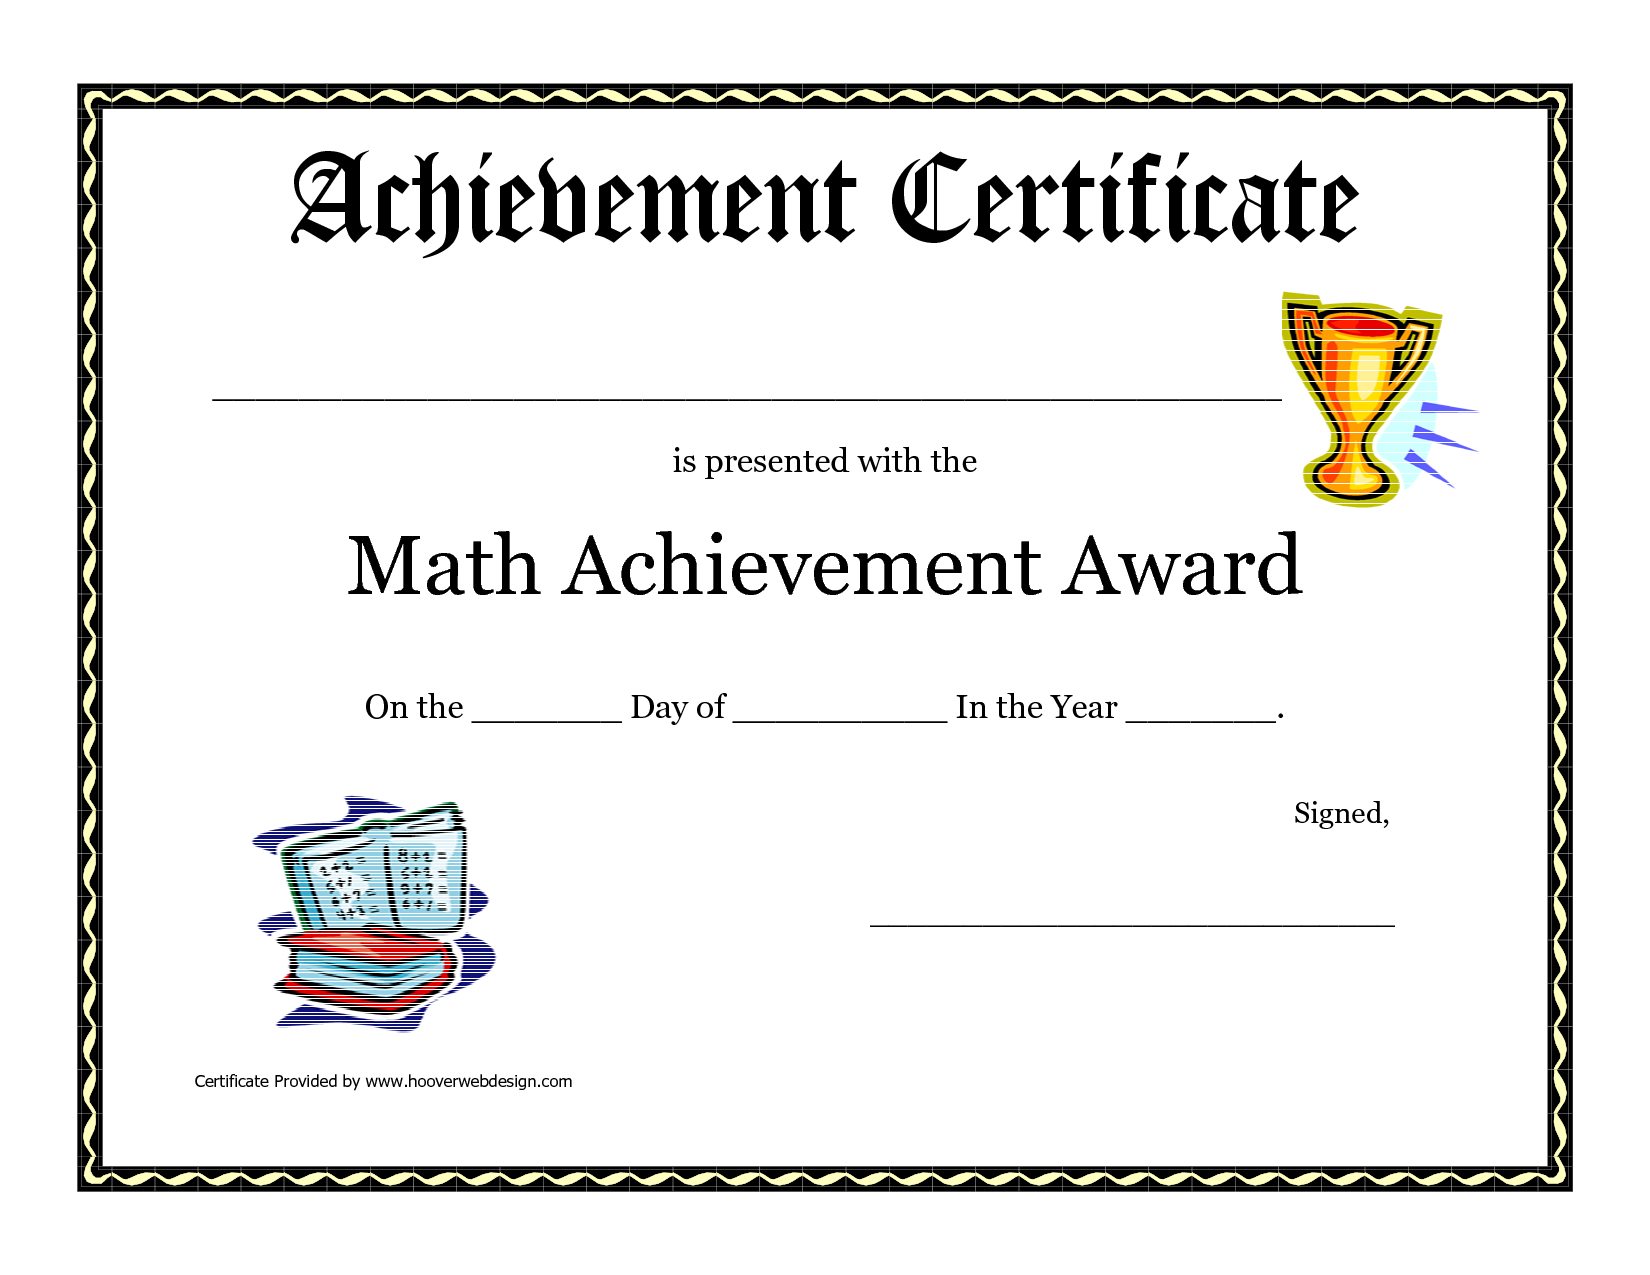 Math Achievement Award Printable Certificate Pdf | Math Activites - Free Printable Student Award Certificate Template